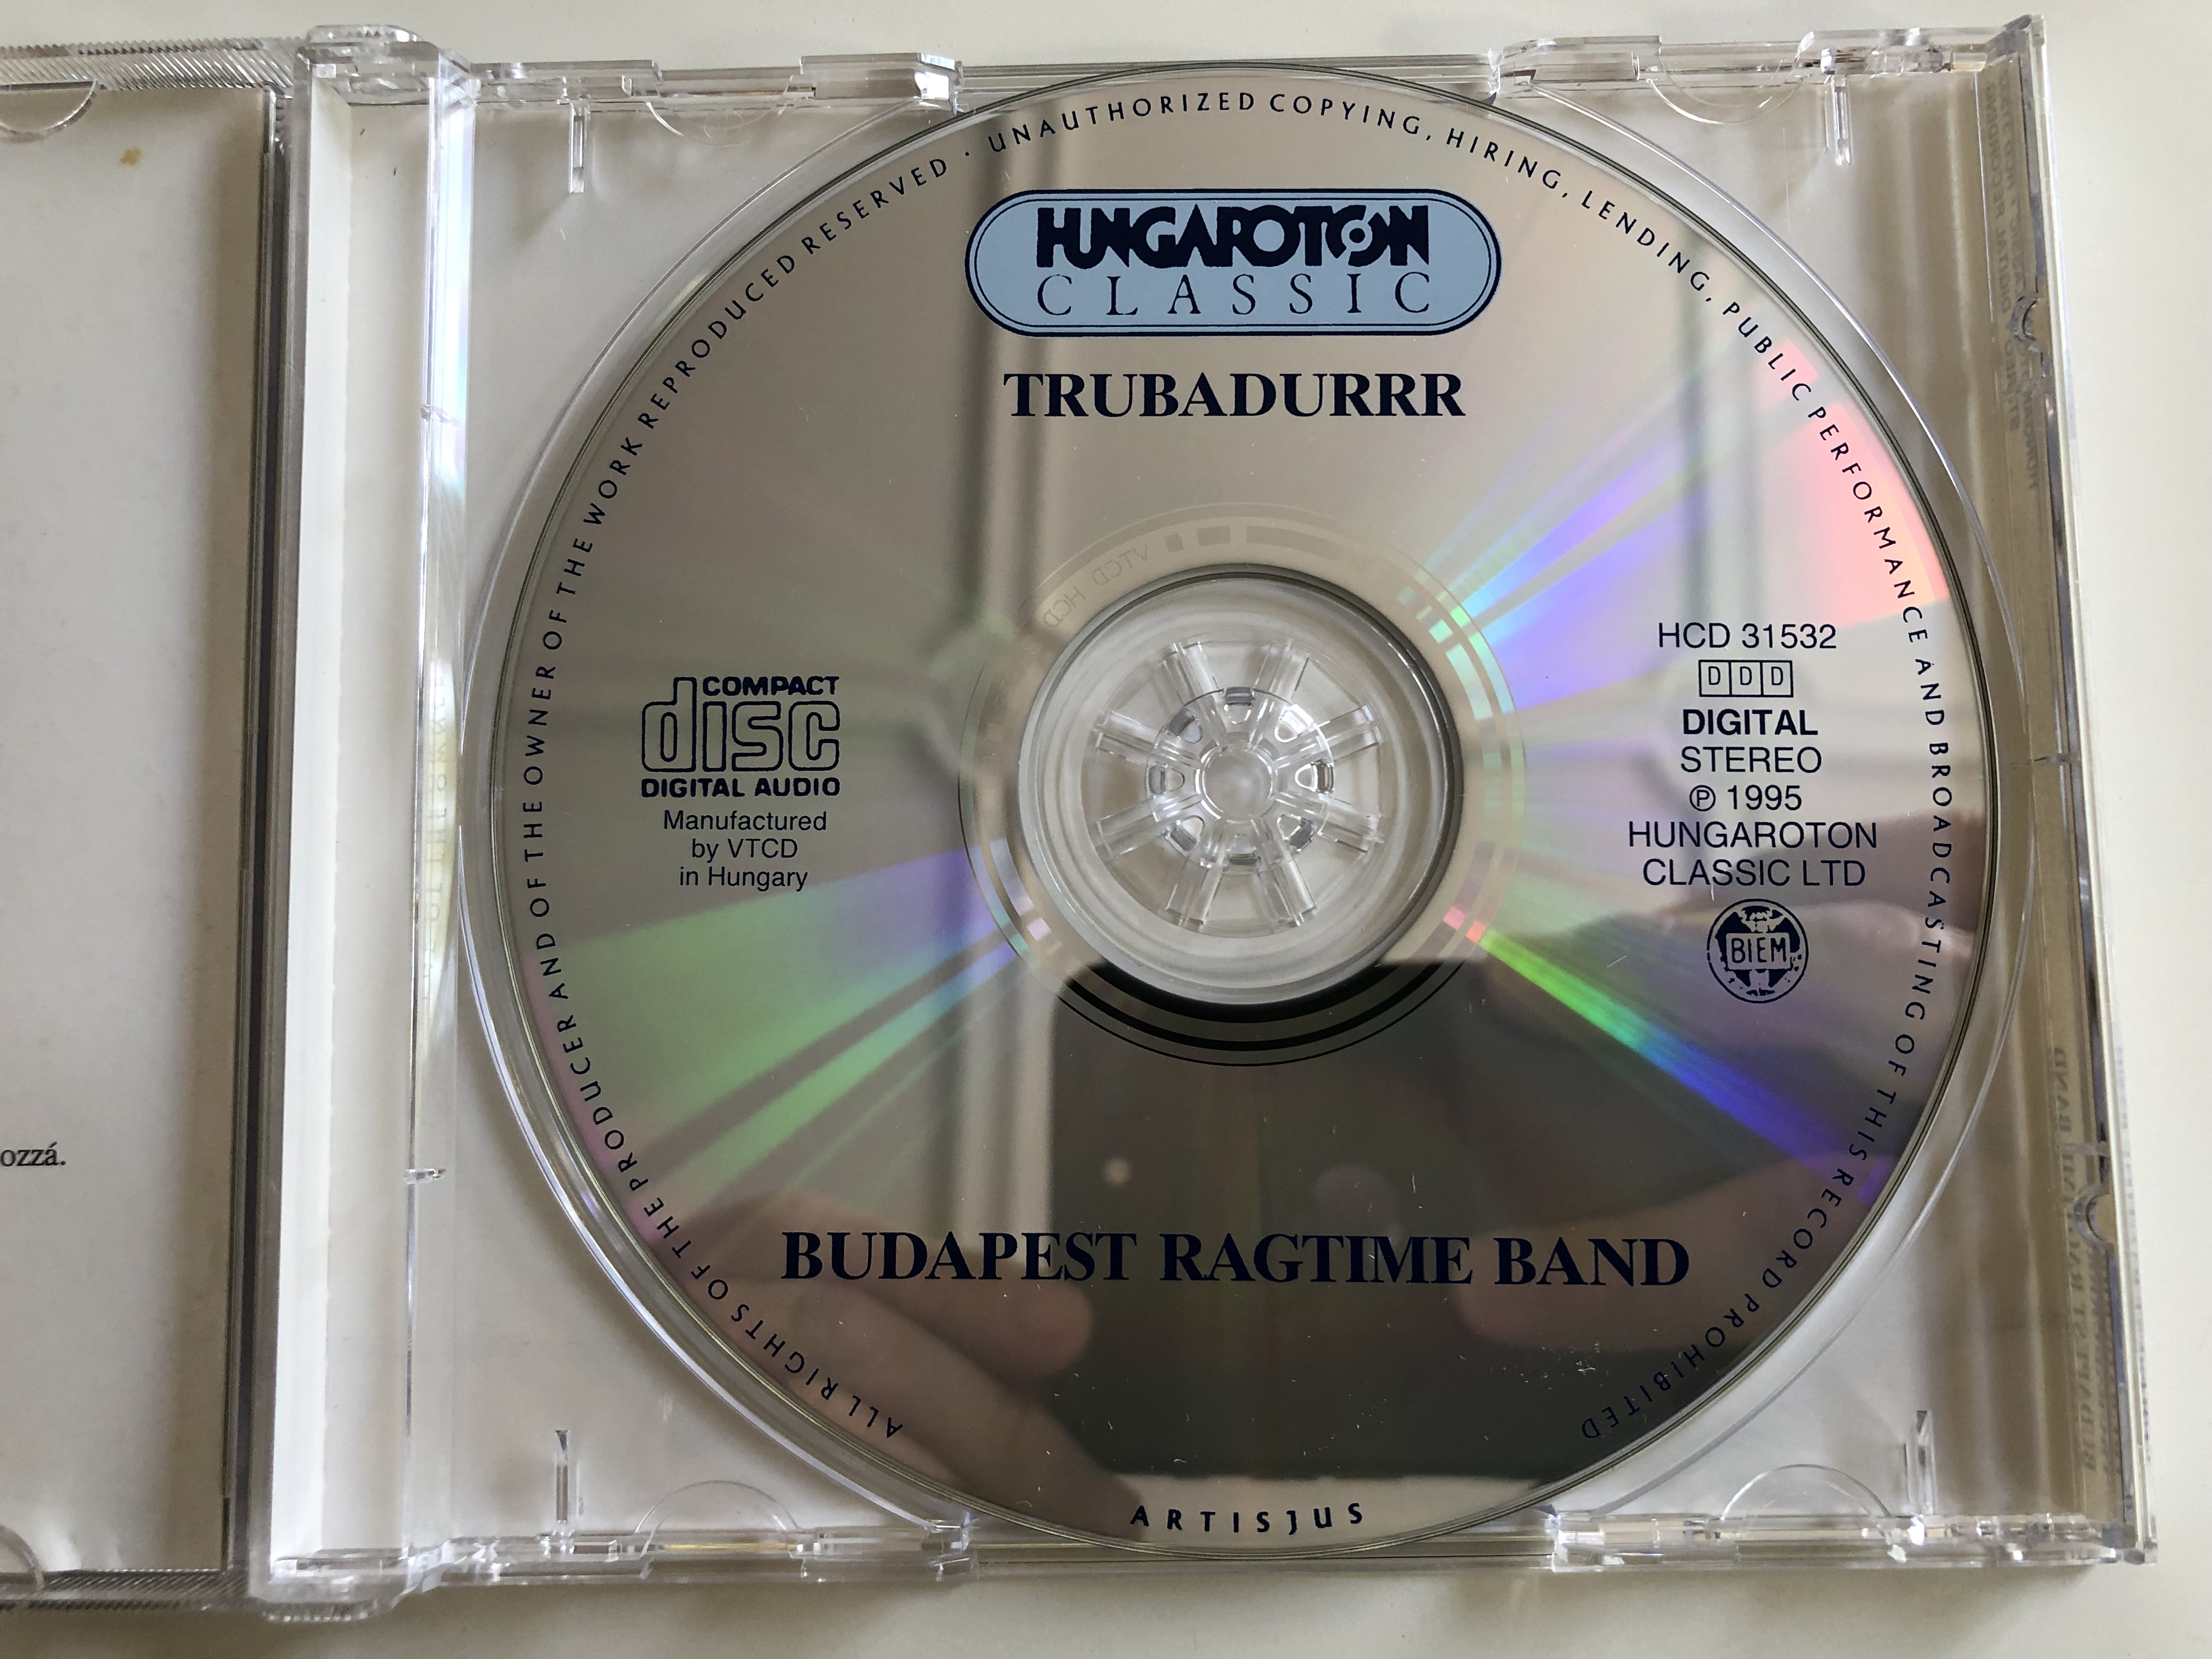 trubadurrr-budapest-ragtime-band-hungaroton-audio-cd-stereo-1995-hcd-31532-8-.jpg